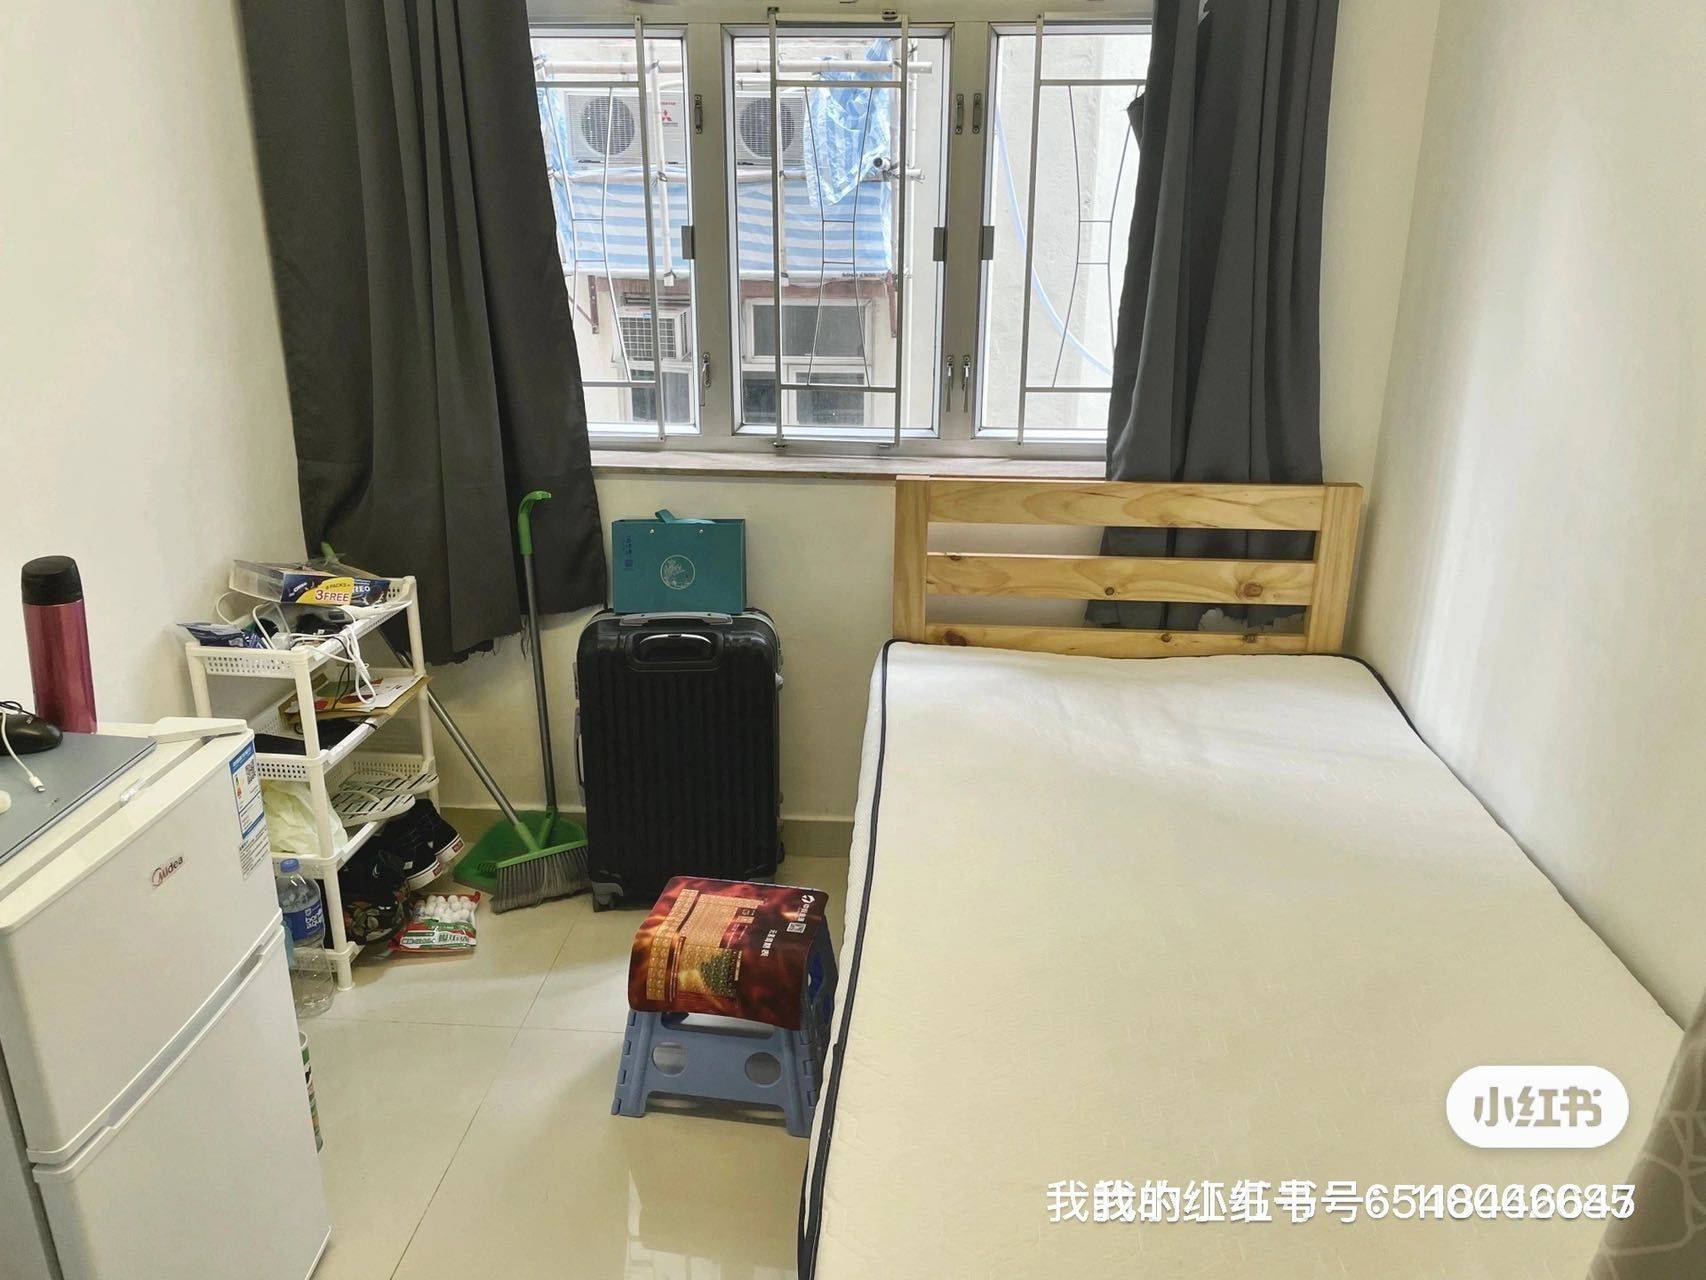 Hong Kong-Hong Kong Island-Cozy Home,Clean&Comfy,No Gender Limit,Chilled,LGBTQ Friendly